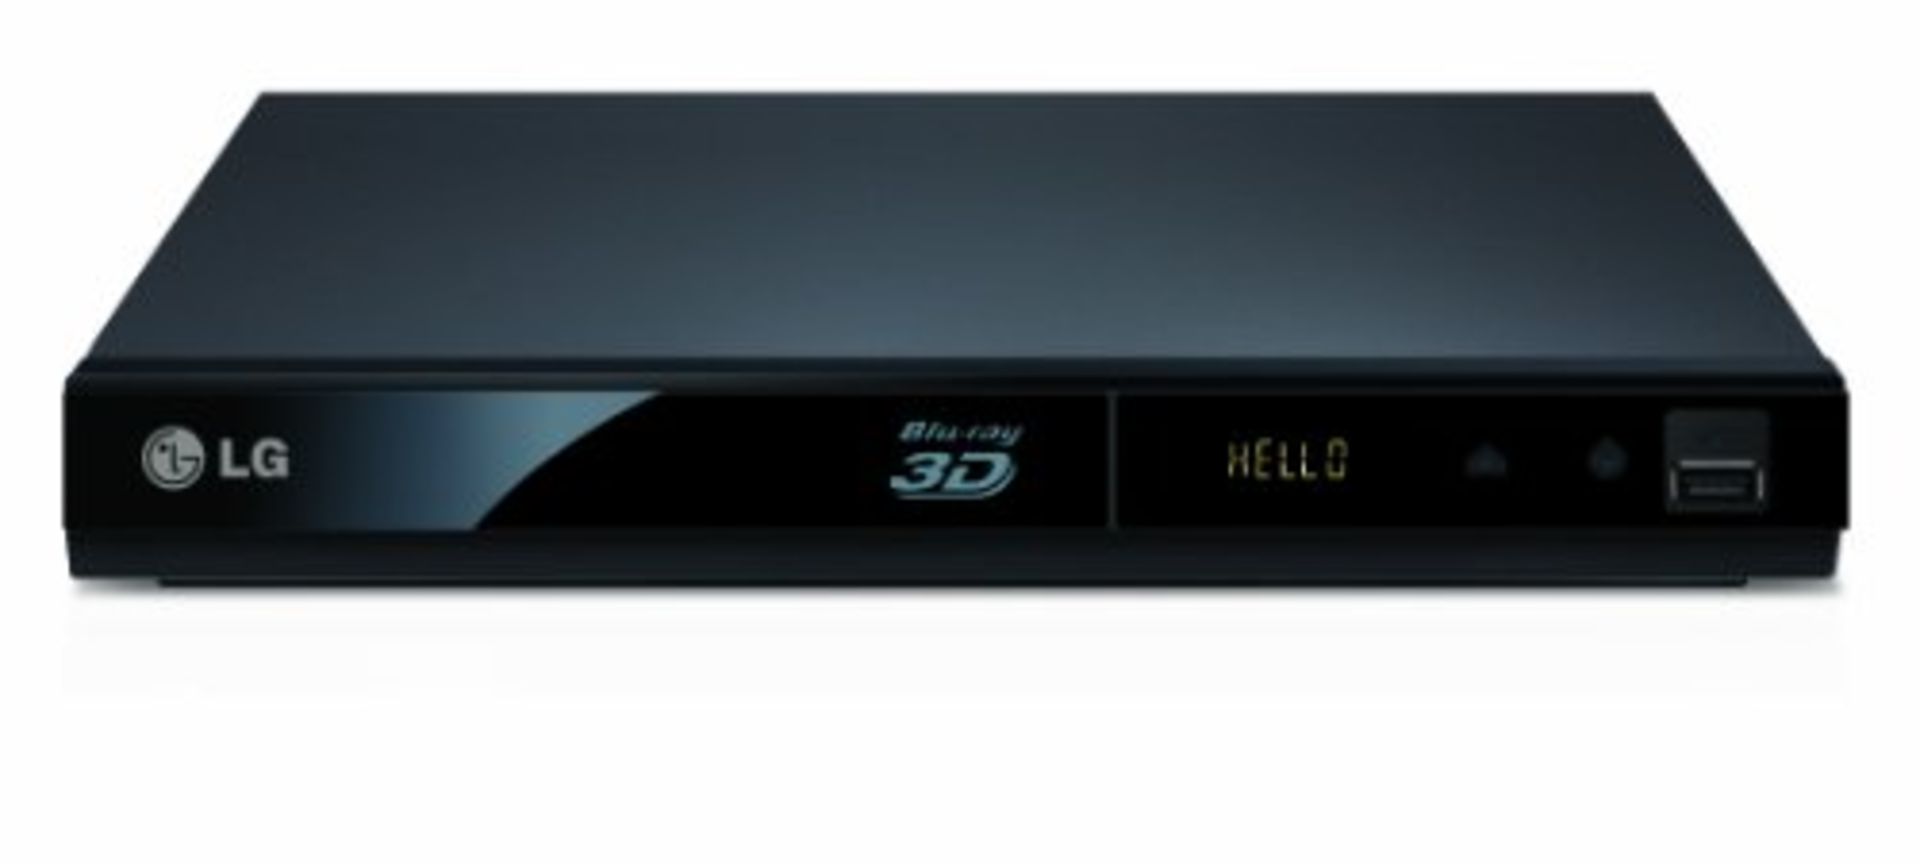 V Grade A LG BP325 3D Smart Blu-Ray Player - Ful HD 1080p Upscaling and USB